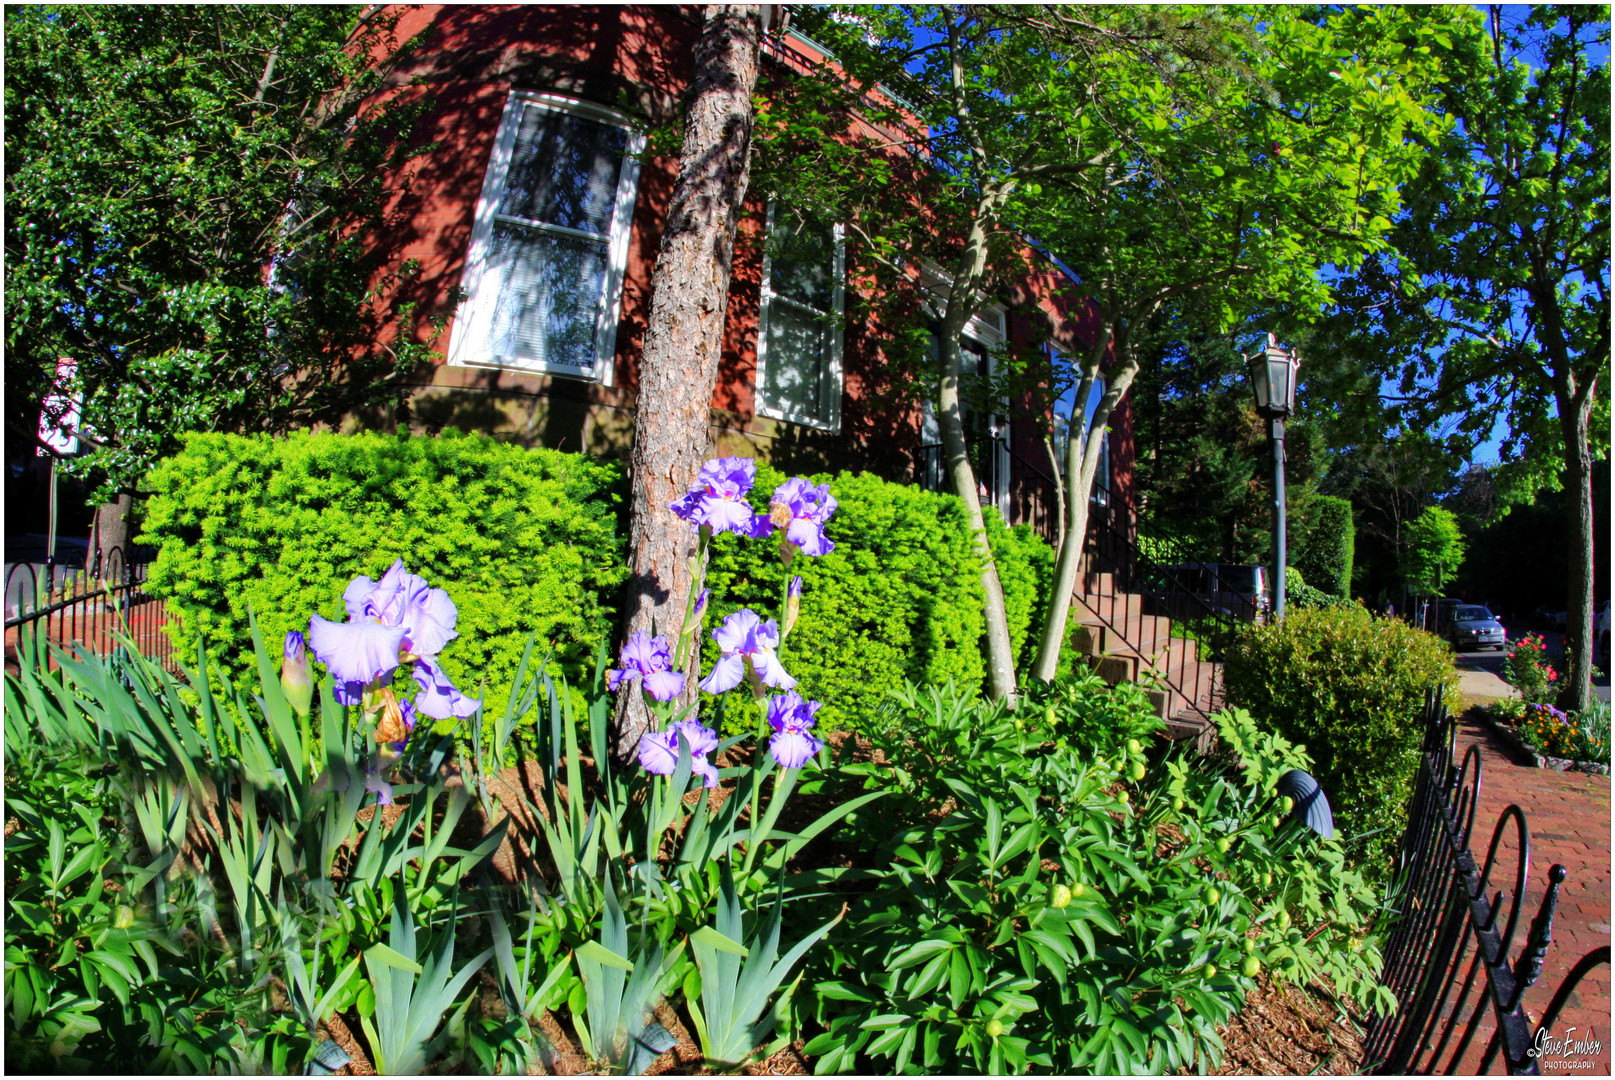 Irises and Ironwork - A Georgetown Springtime Impression